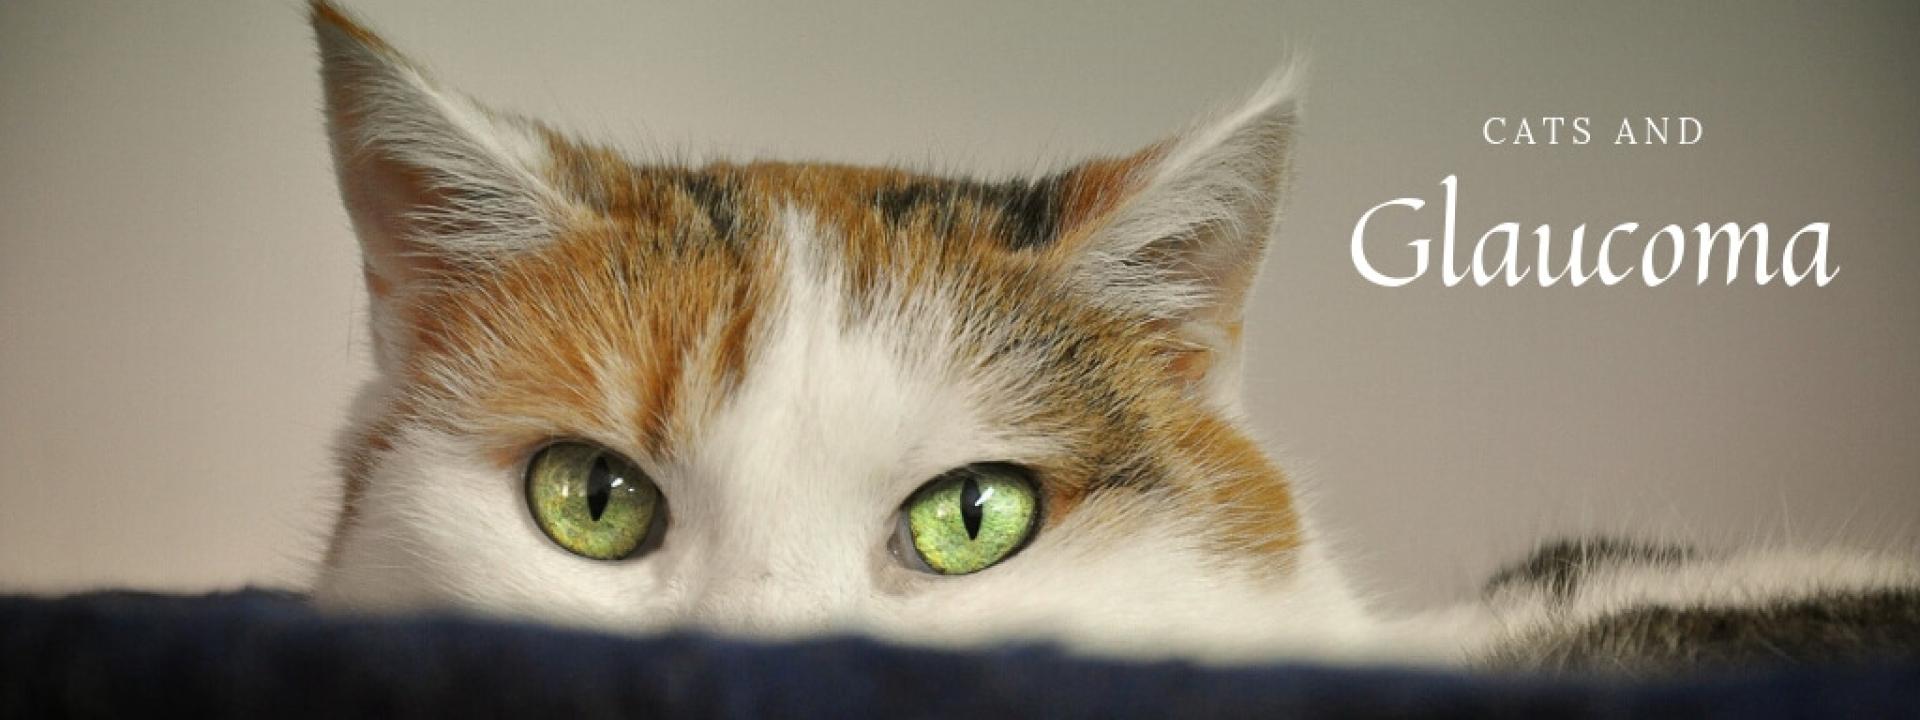 cats-and-glaucoma-blog-header.jpg